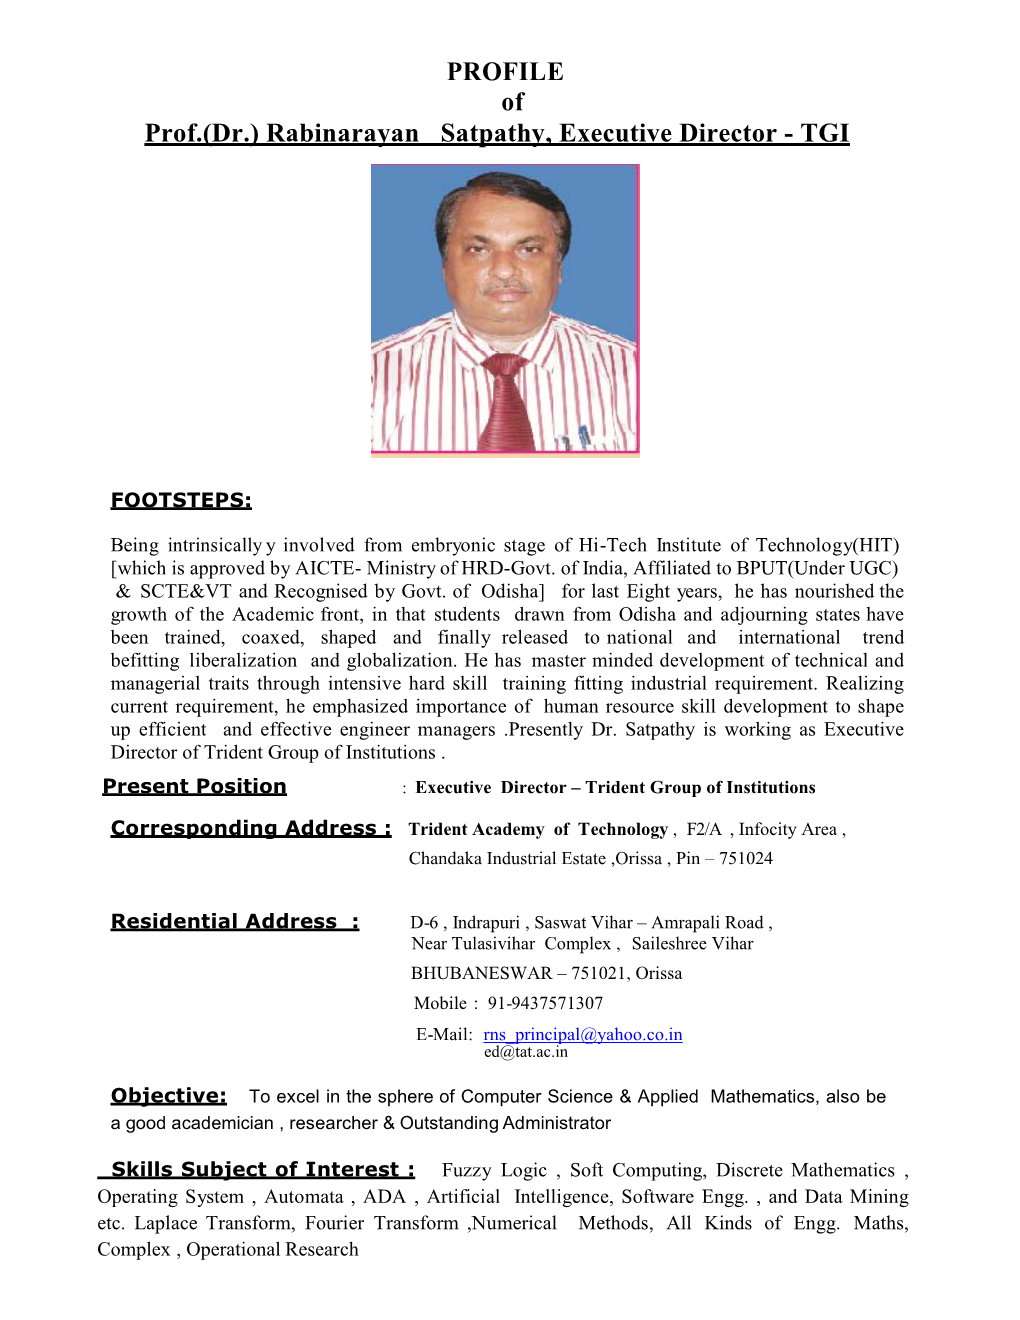 PROFILE of Prof.(Dr.) Rabinarayan Satpathy, Executive Director - TGI